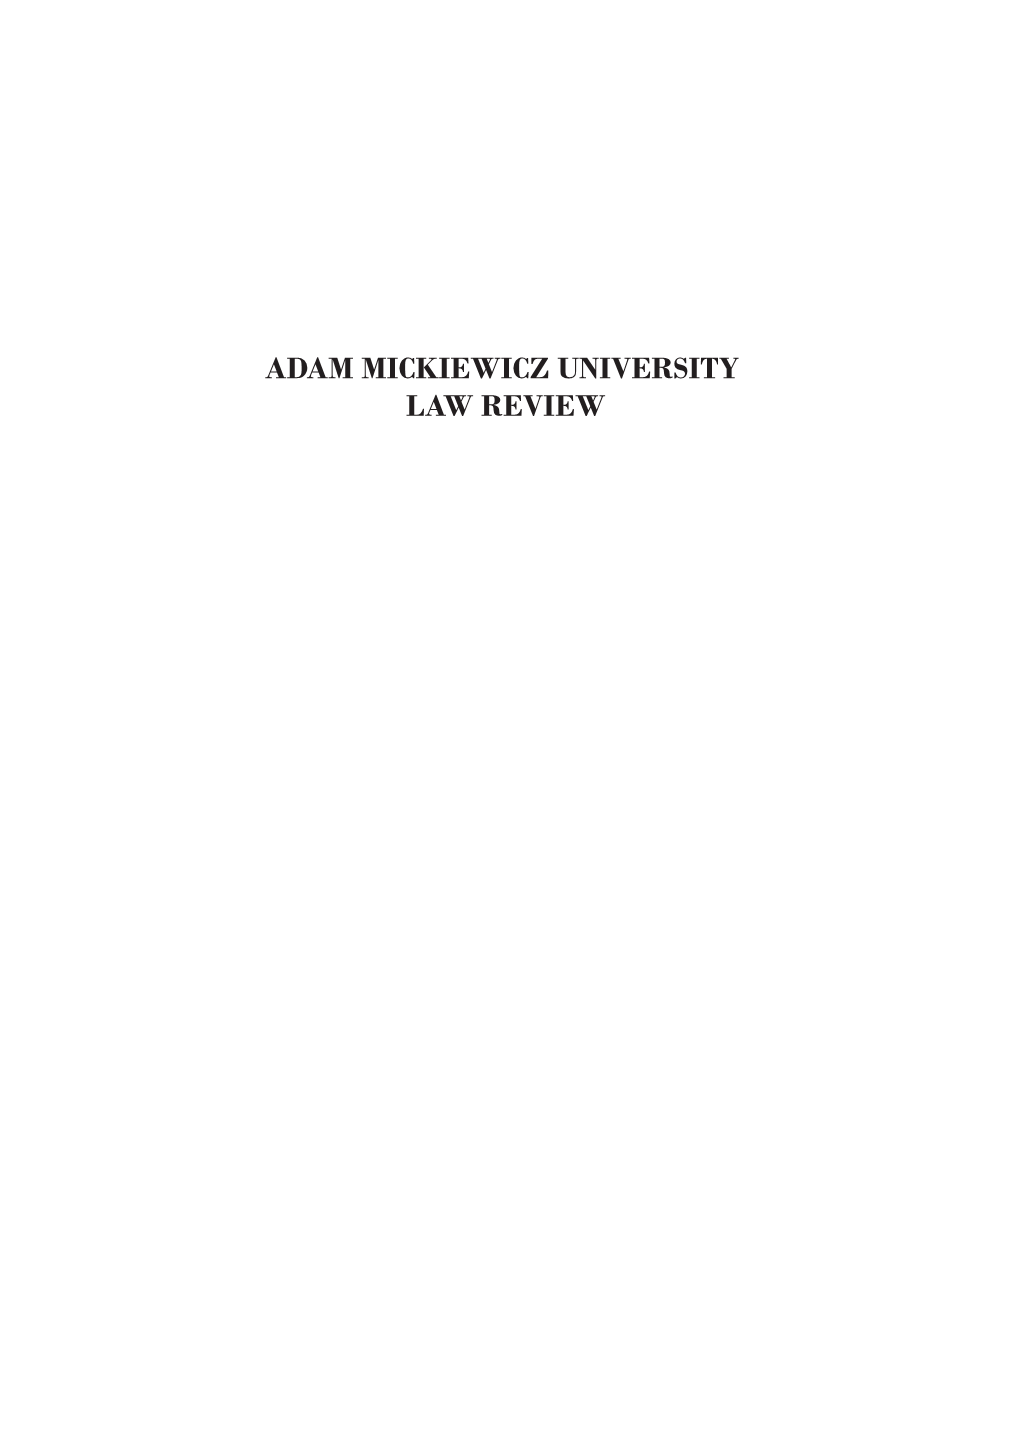 Adam Mickiewicz University Law Review, Vol. 8